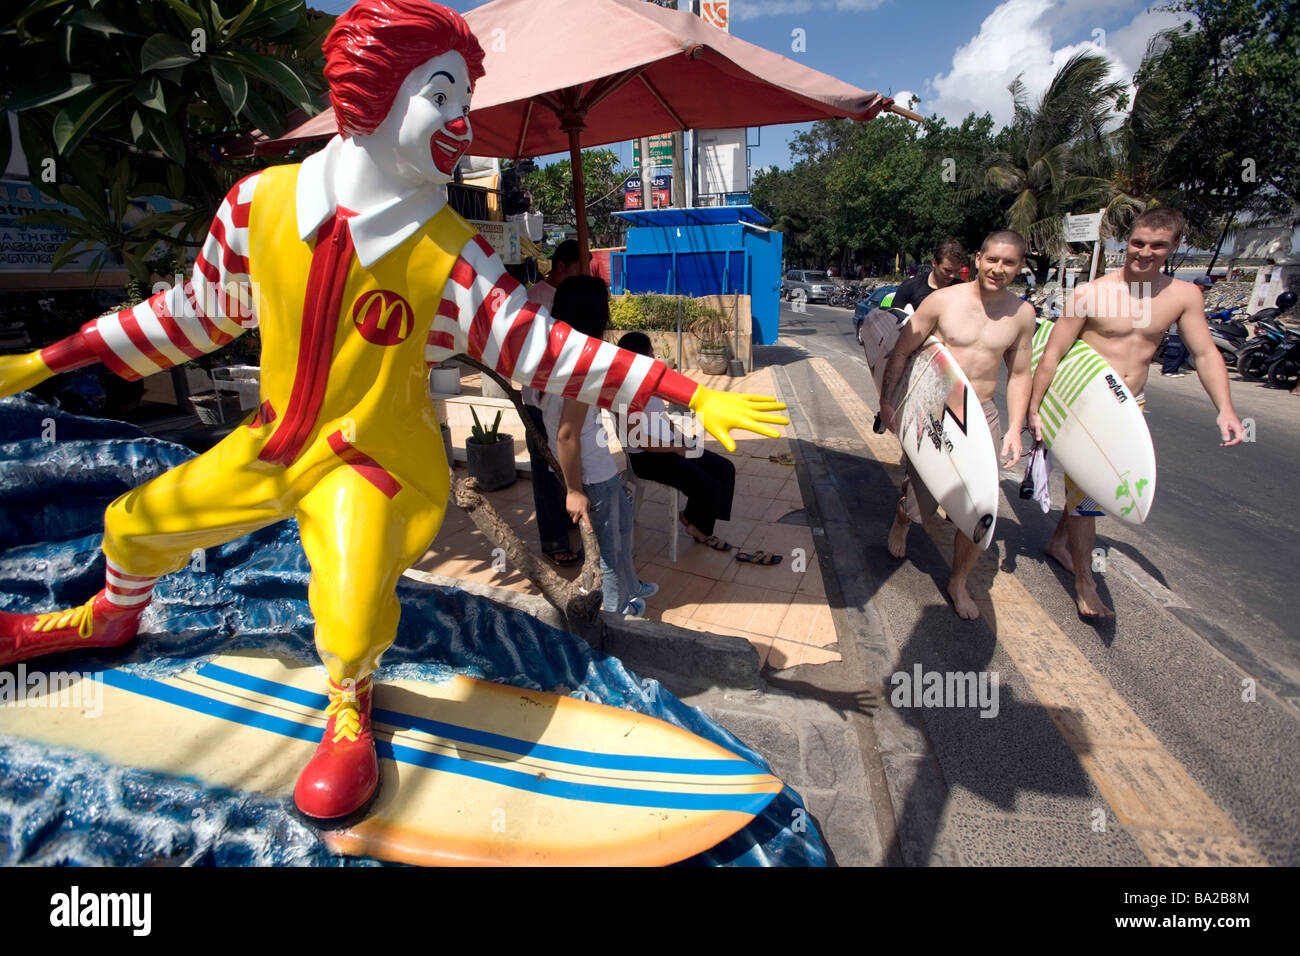 Indonesia, Bali. Kuta. Surfers, McDonalds restaurant, surfing Ronald McDonald statue, surfers. Stock Photo